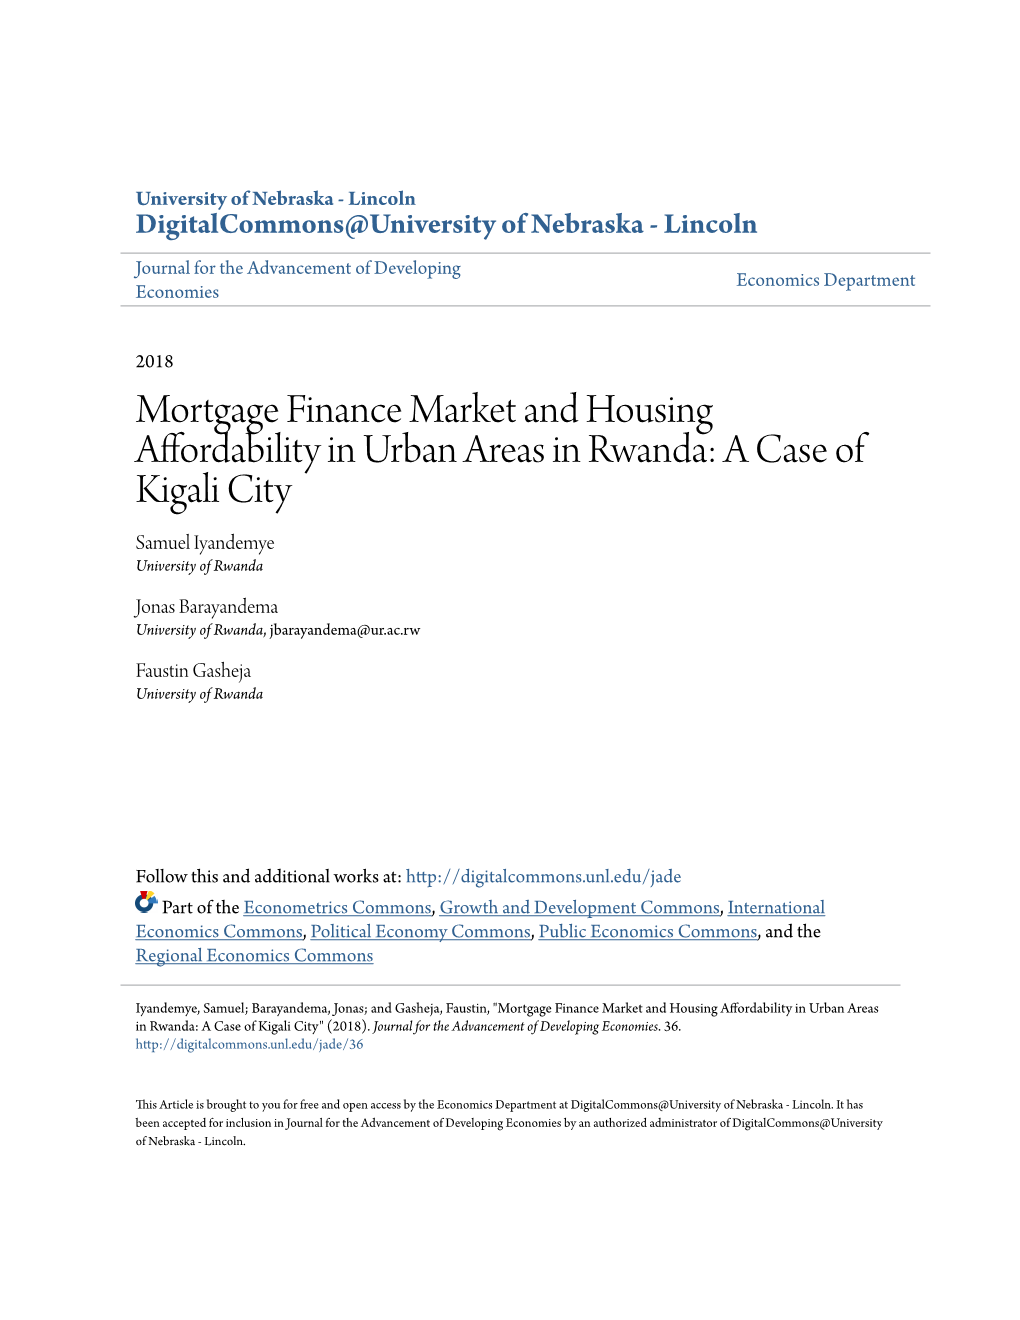 Mortgage Finance Market and Housing Affordability in Urban Areas in Rwanda: a Case of Kigali City Samuel Iyandemye University of Rwanda